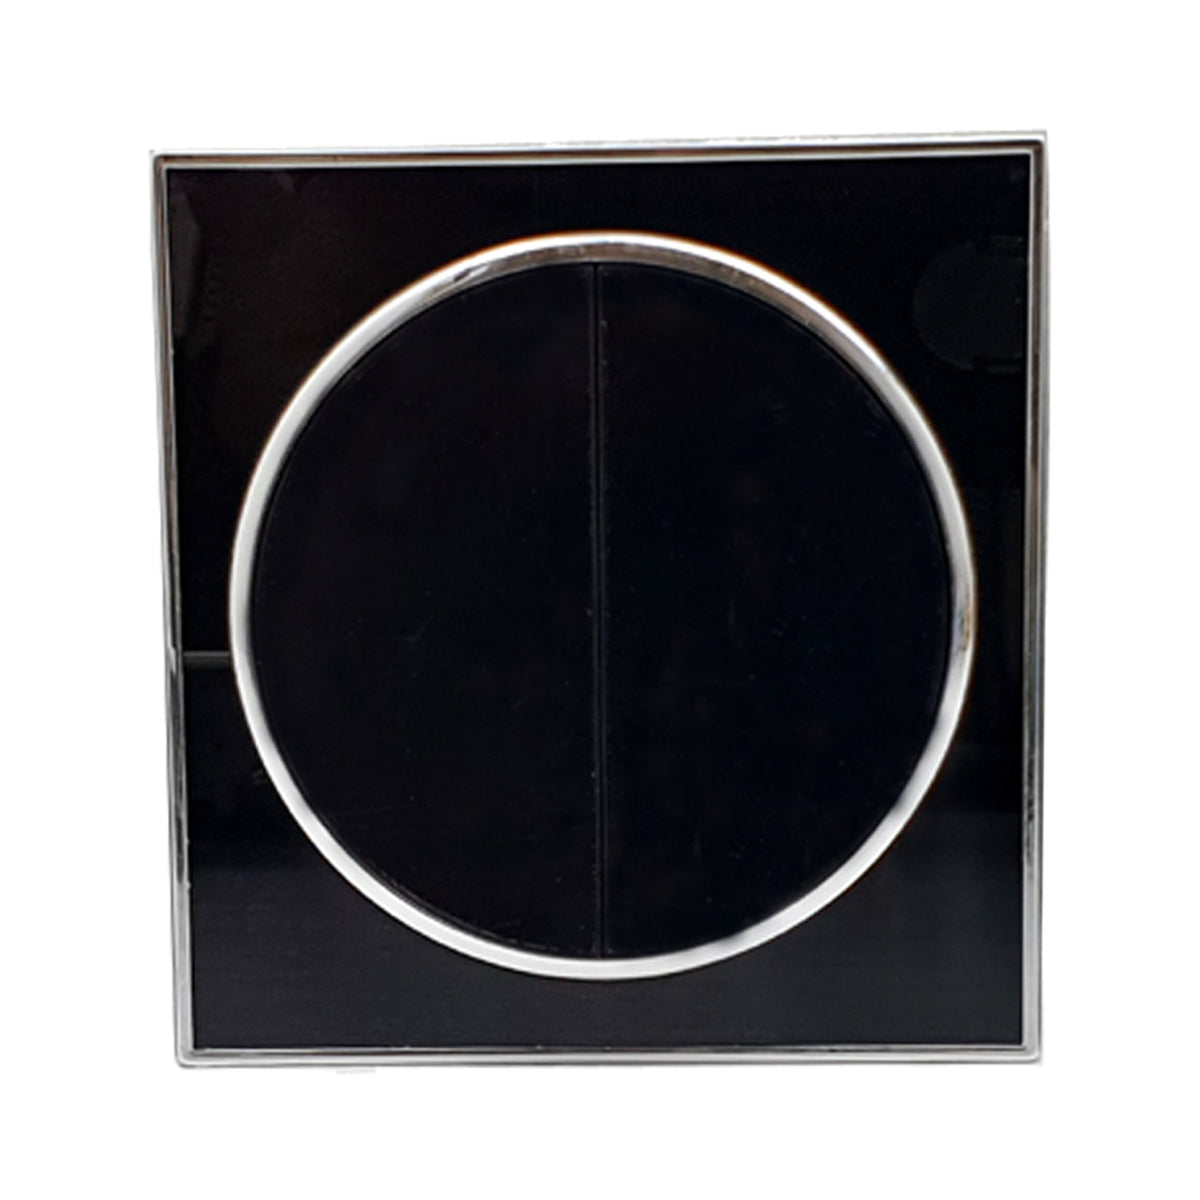 LEDSon industrial vintage Black Round 2 Gang Screw less Flat plate Wall light switches~2623 - LEDSone UK Ltd